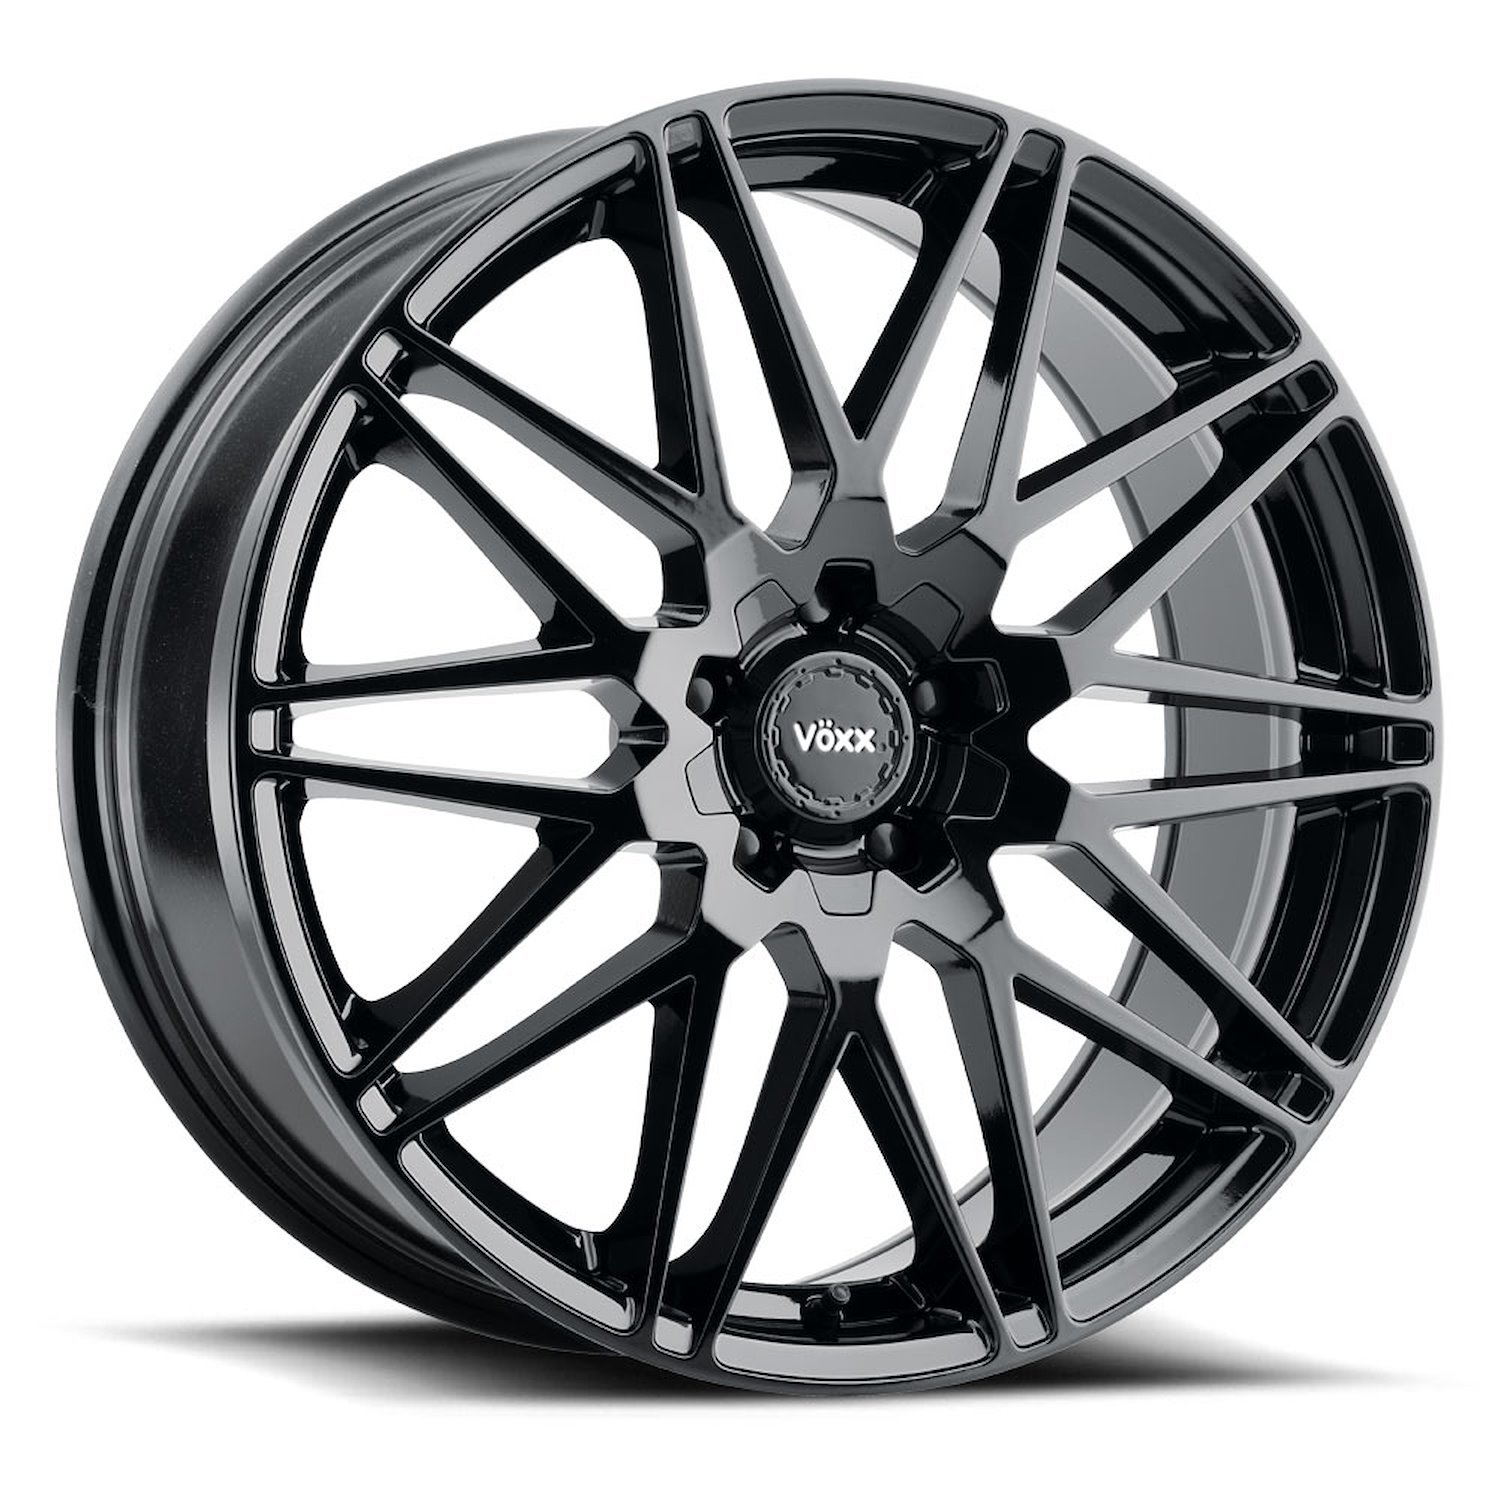 NCE 775-5004-20 GB Nice Wheel [Size: 17" x 7.50"] Finish: Gloss Black